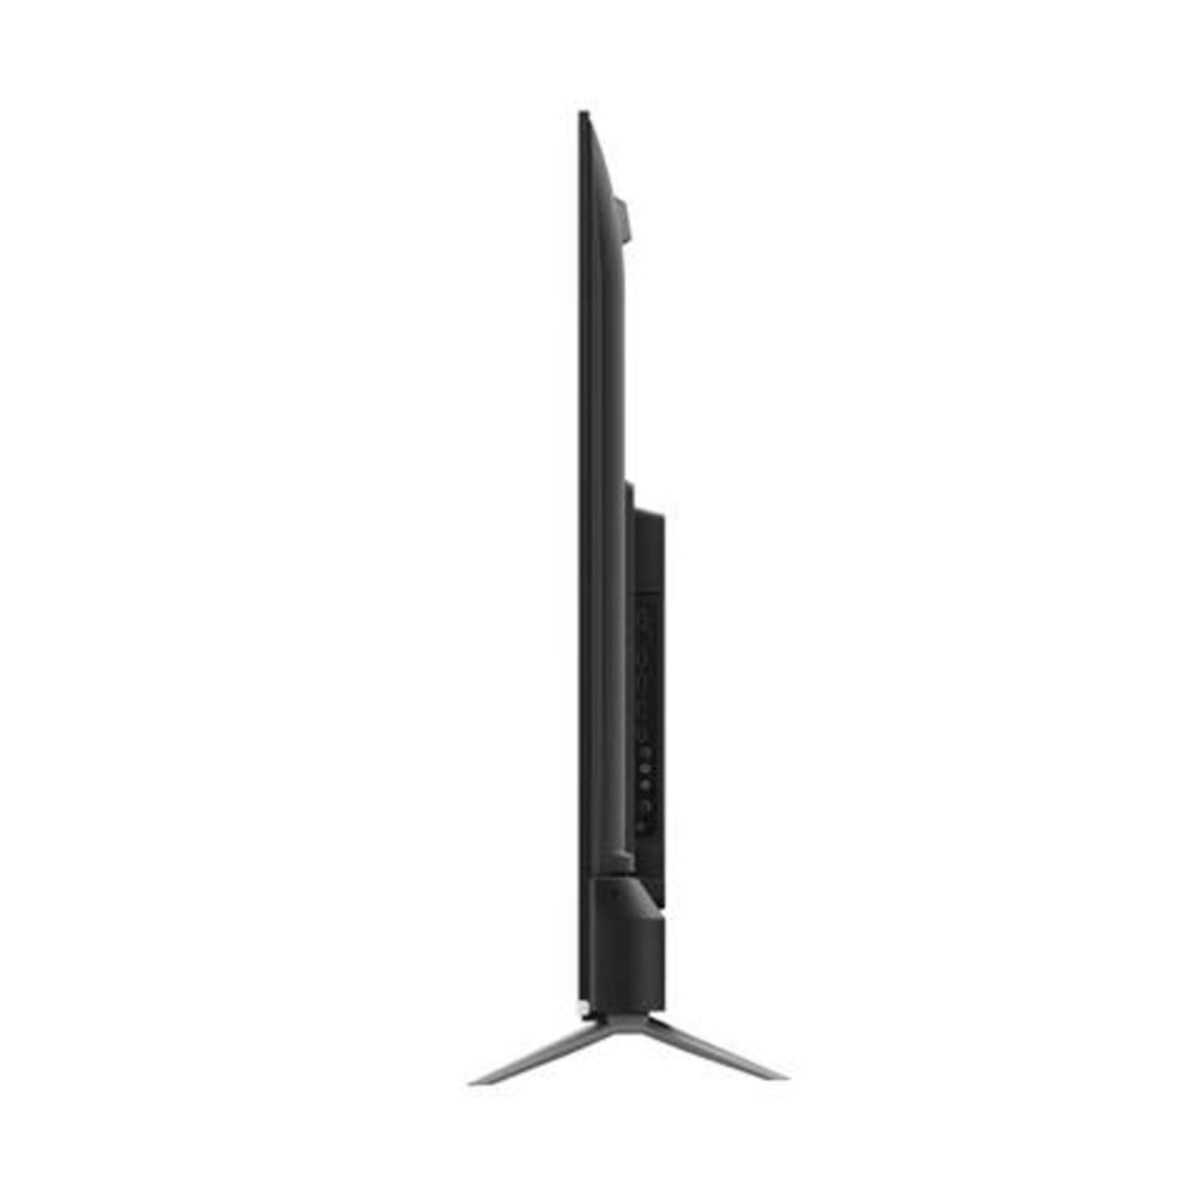 TCL C Series 50 inches 4K QLED Google TV, 50C635, Black